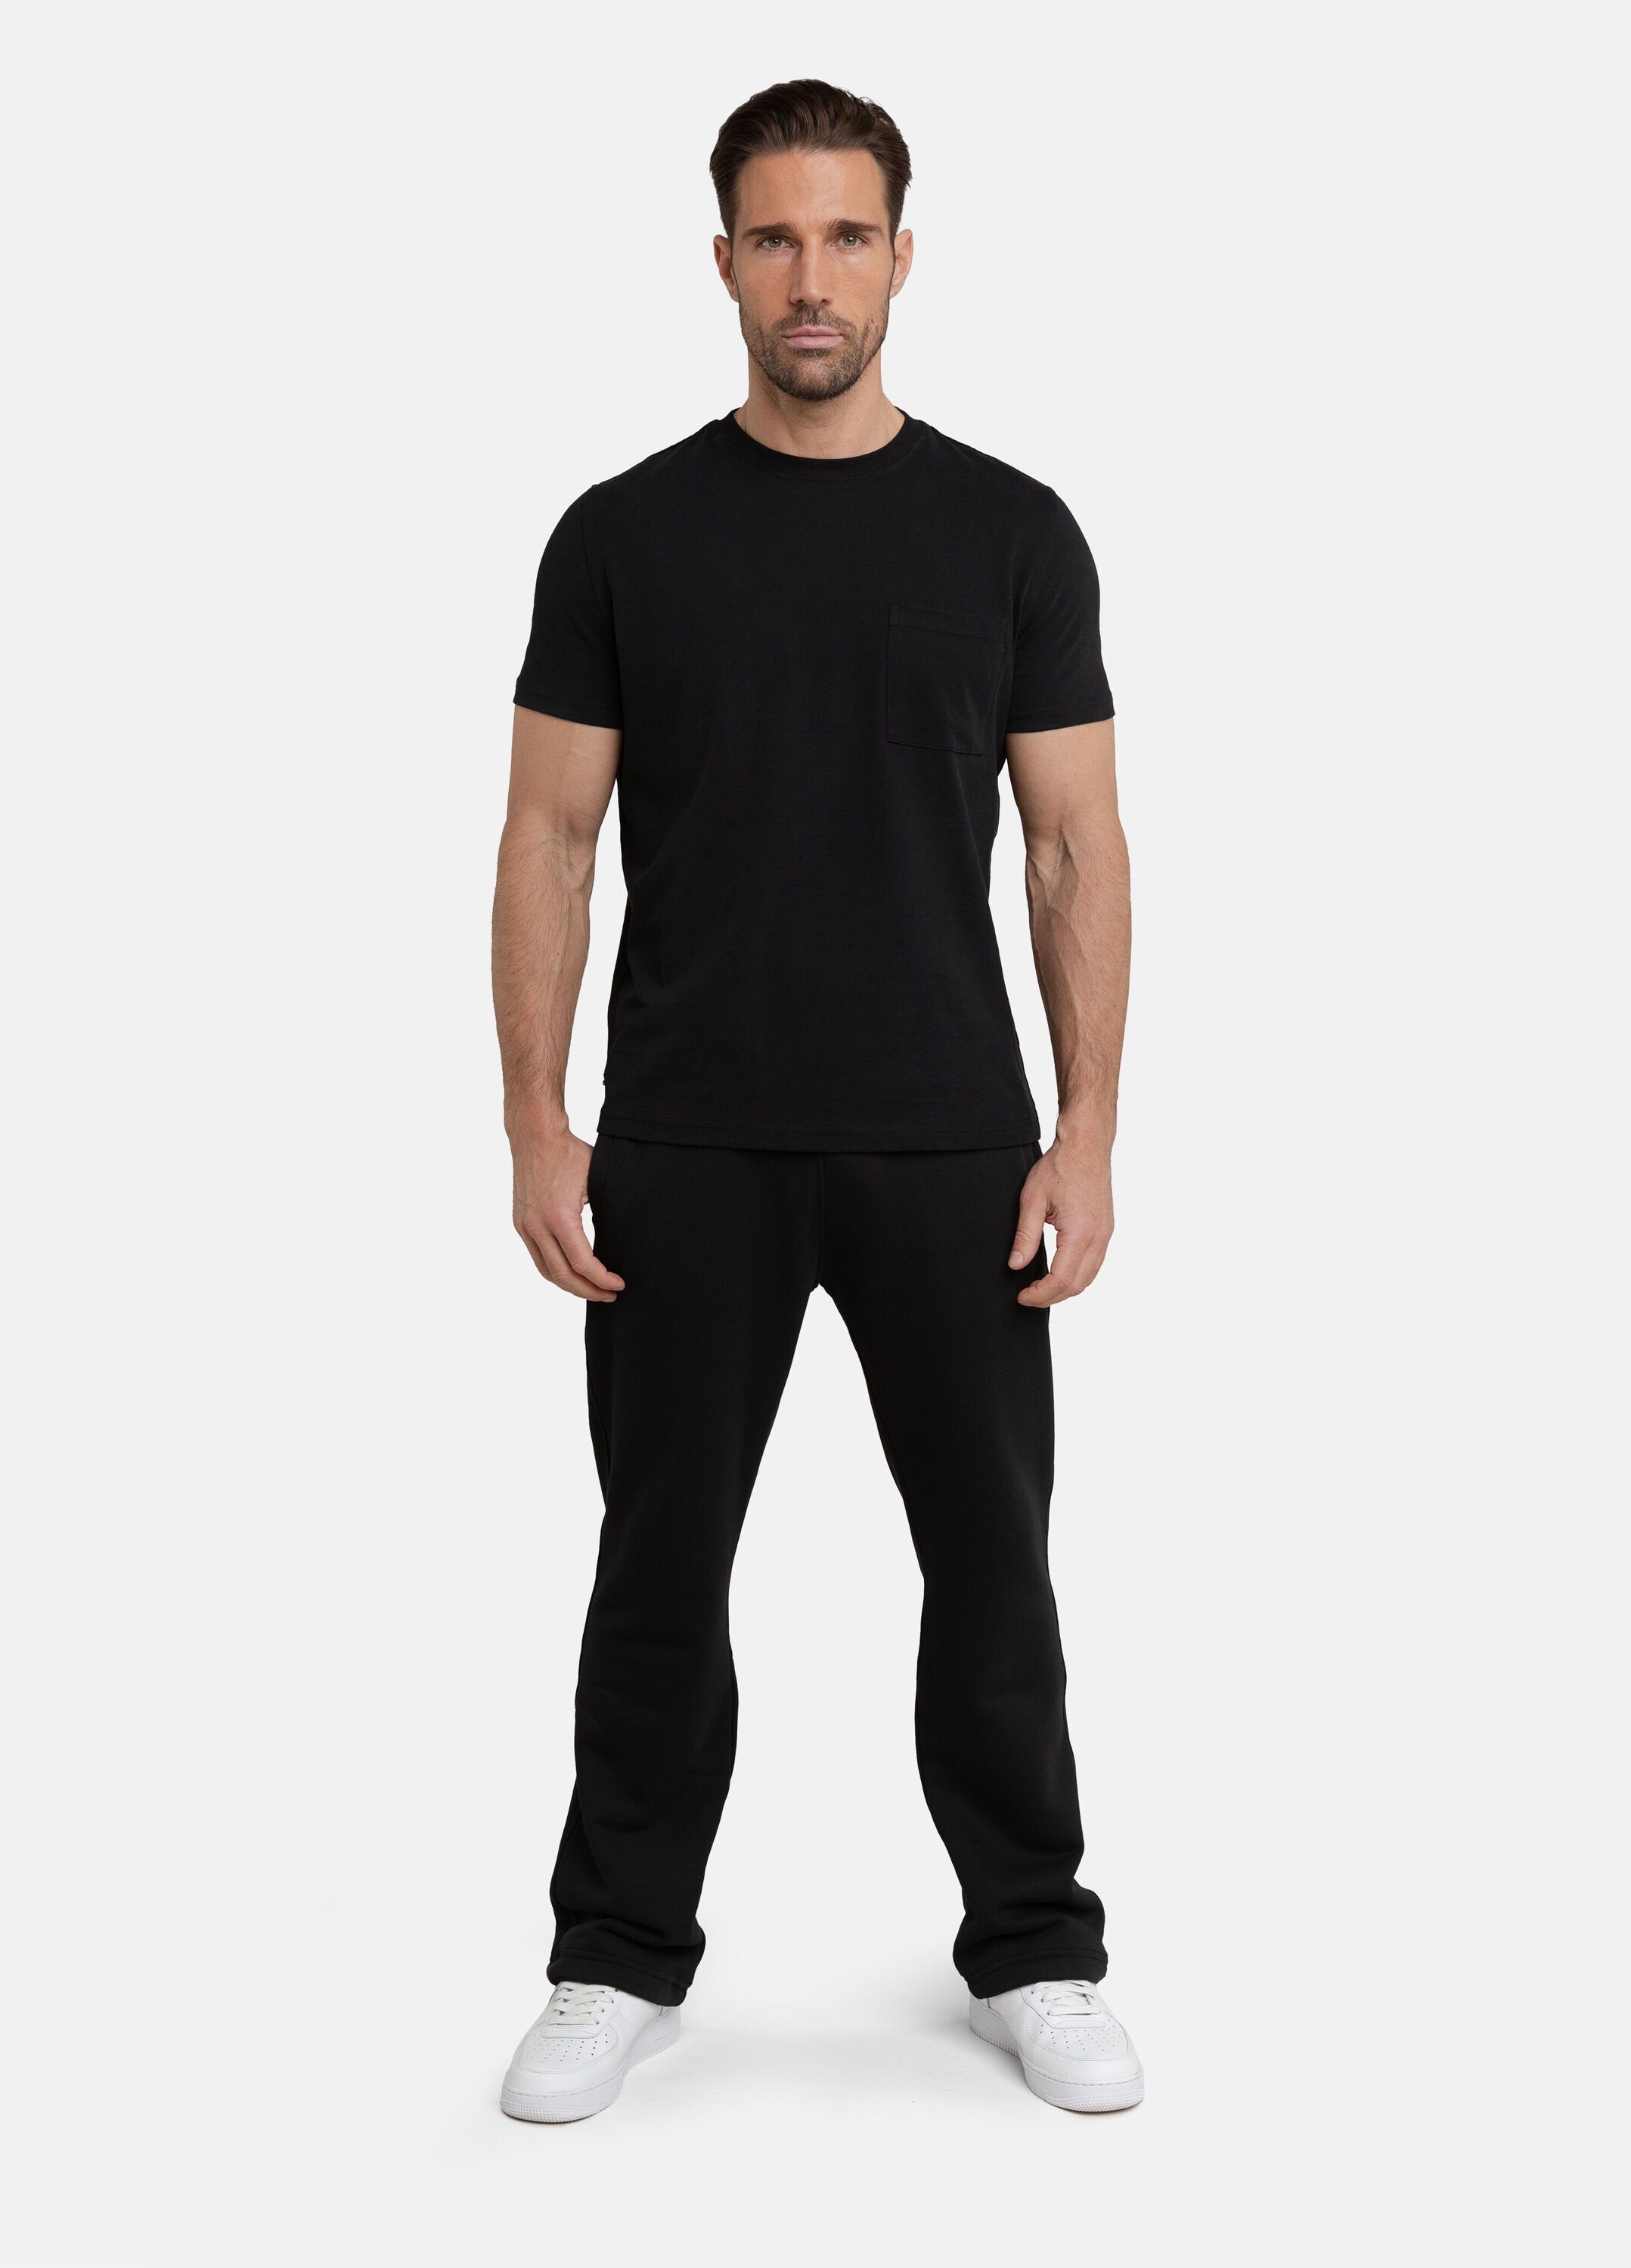 SQUEQO T-Shirt mit geripptem Rundhalsausschnitt Black